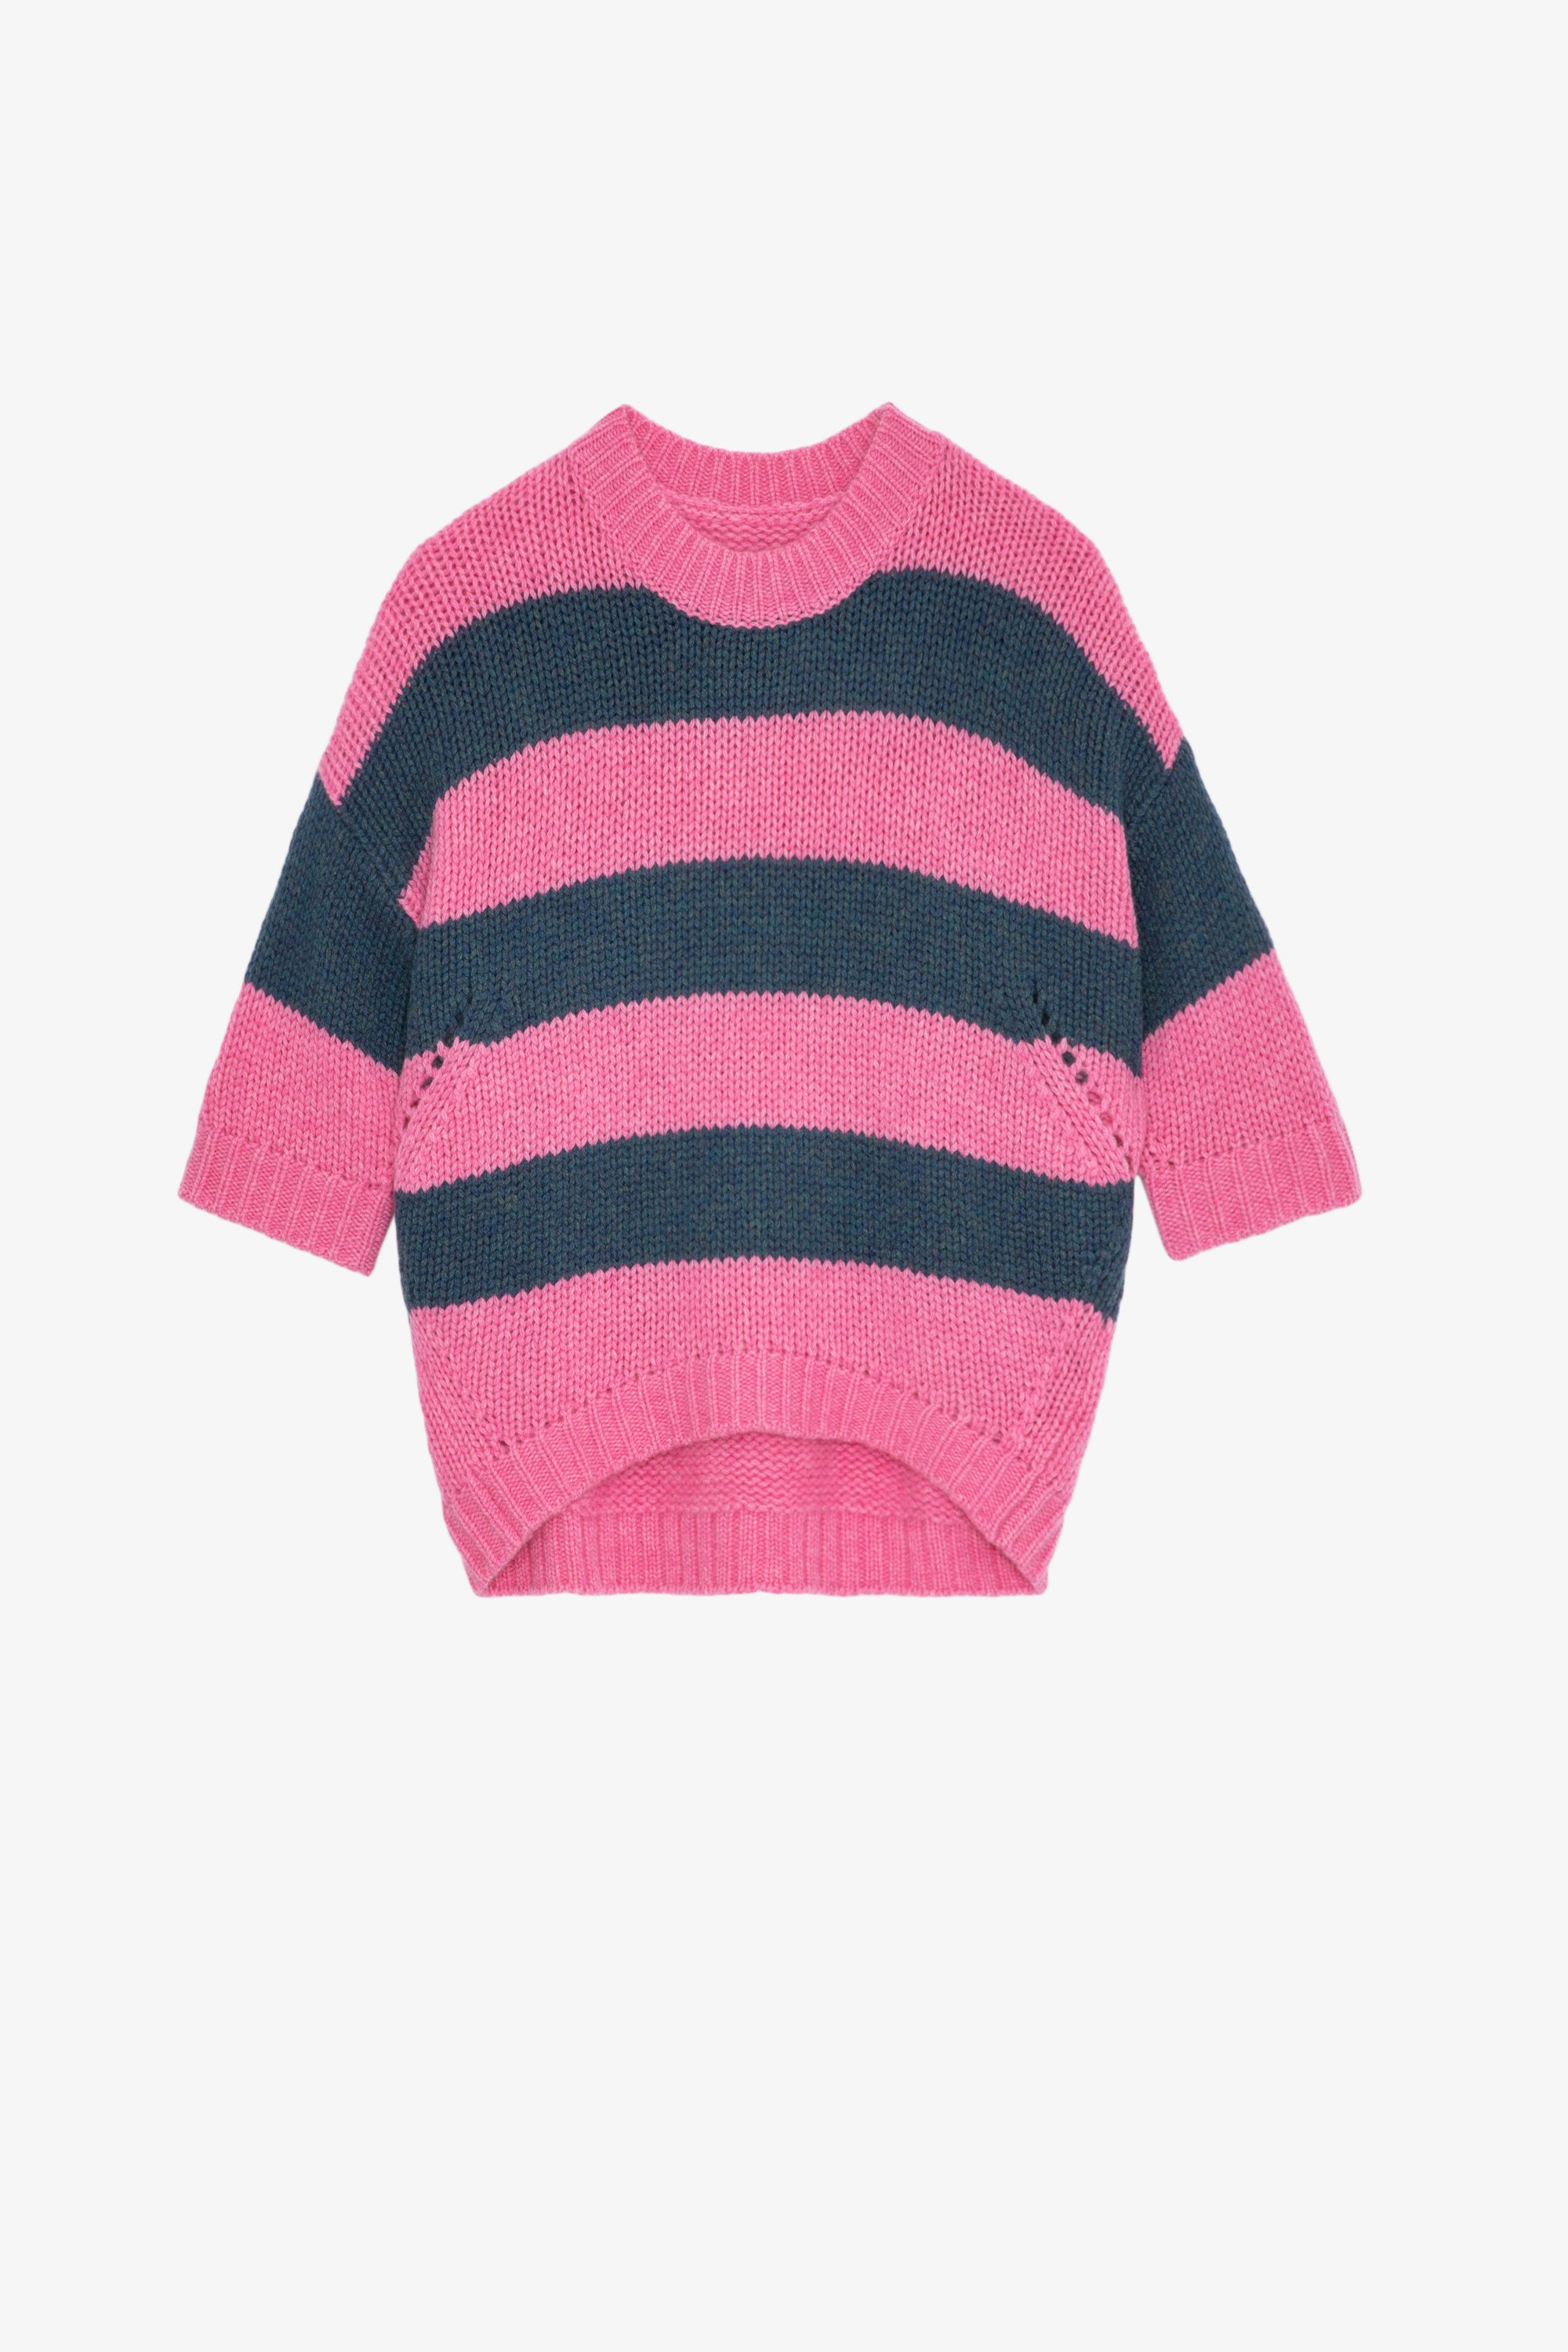 Bully Striped Sweater - Women's oversized striped short sleeved sweater.